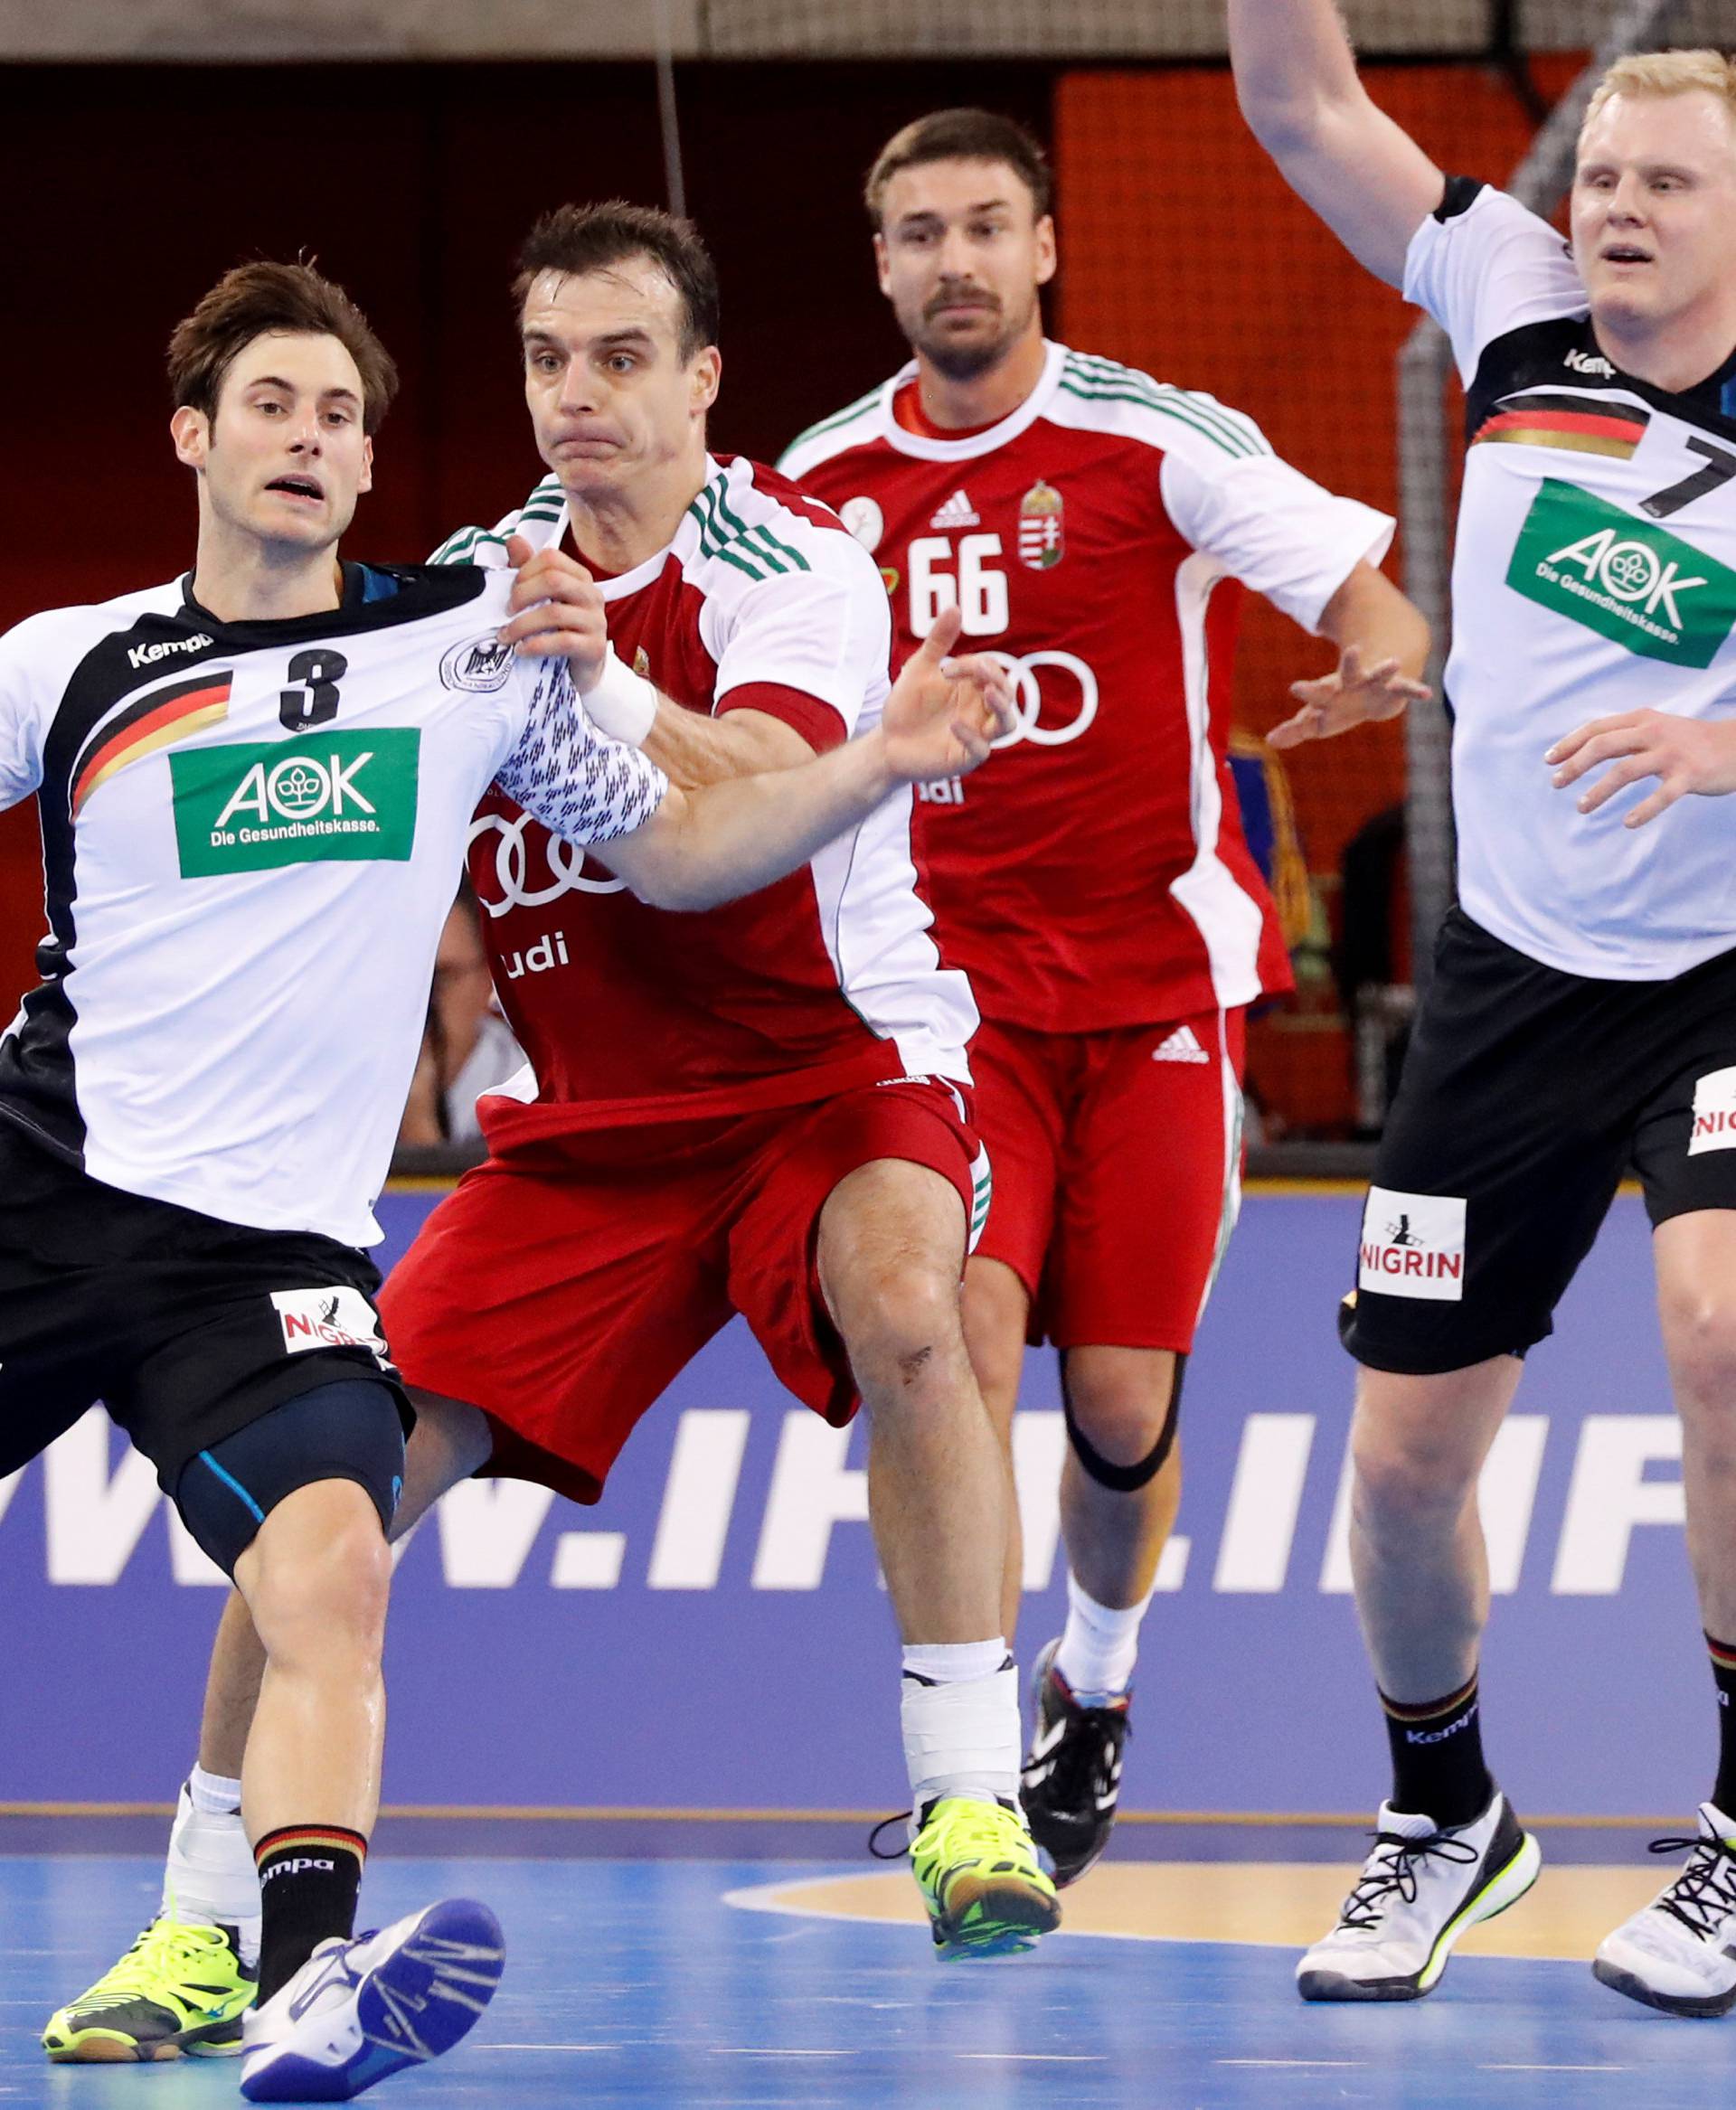 Men's Handball - Germany v Hungary - 2017 Men's World Championship Main Round - Group C